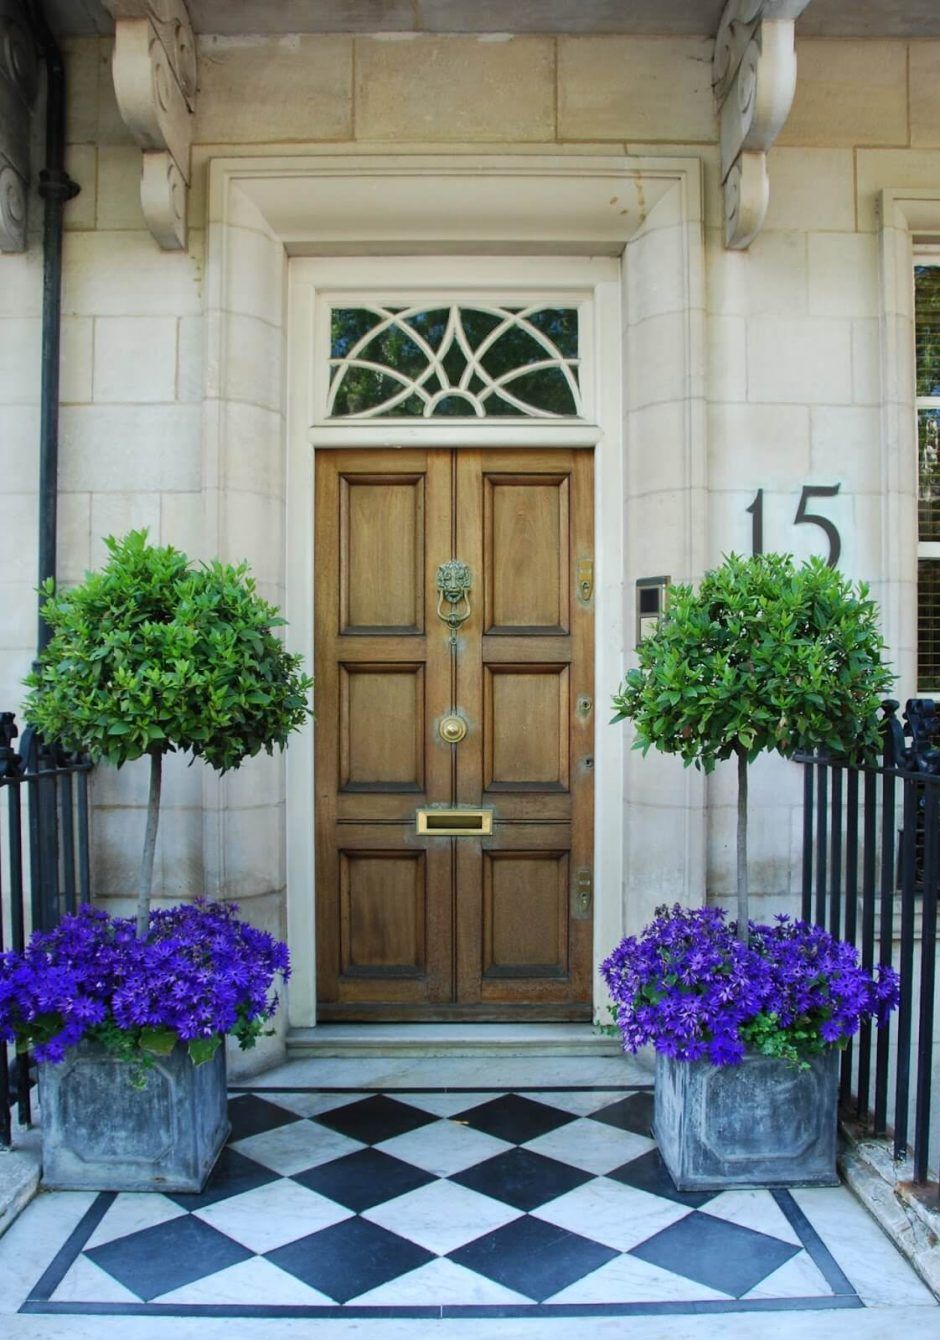 plantas decorando a porta de entrada da casa